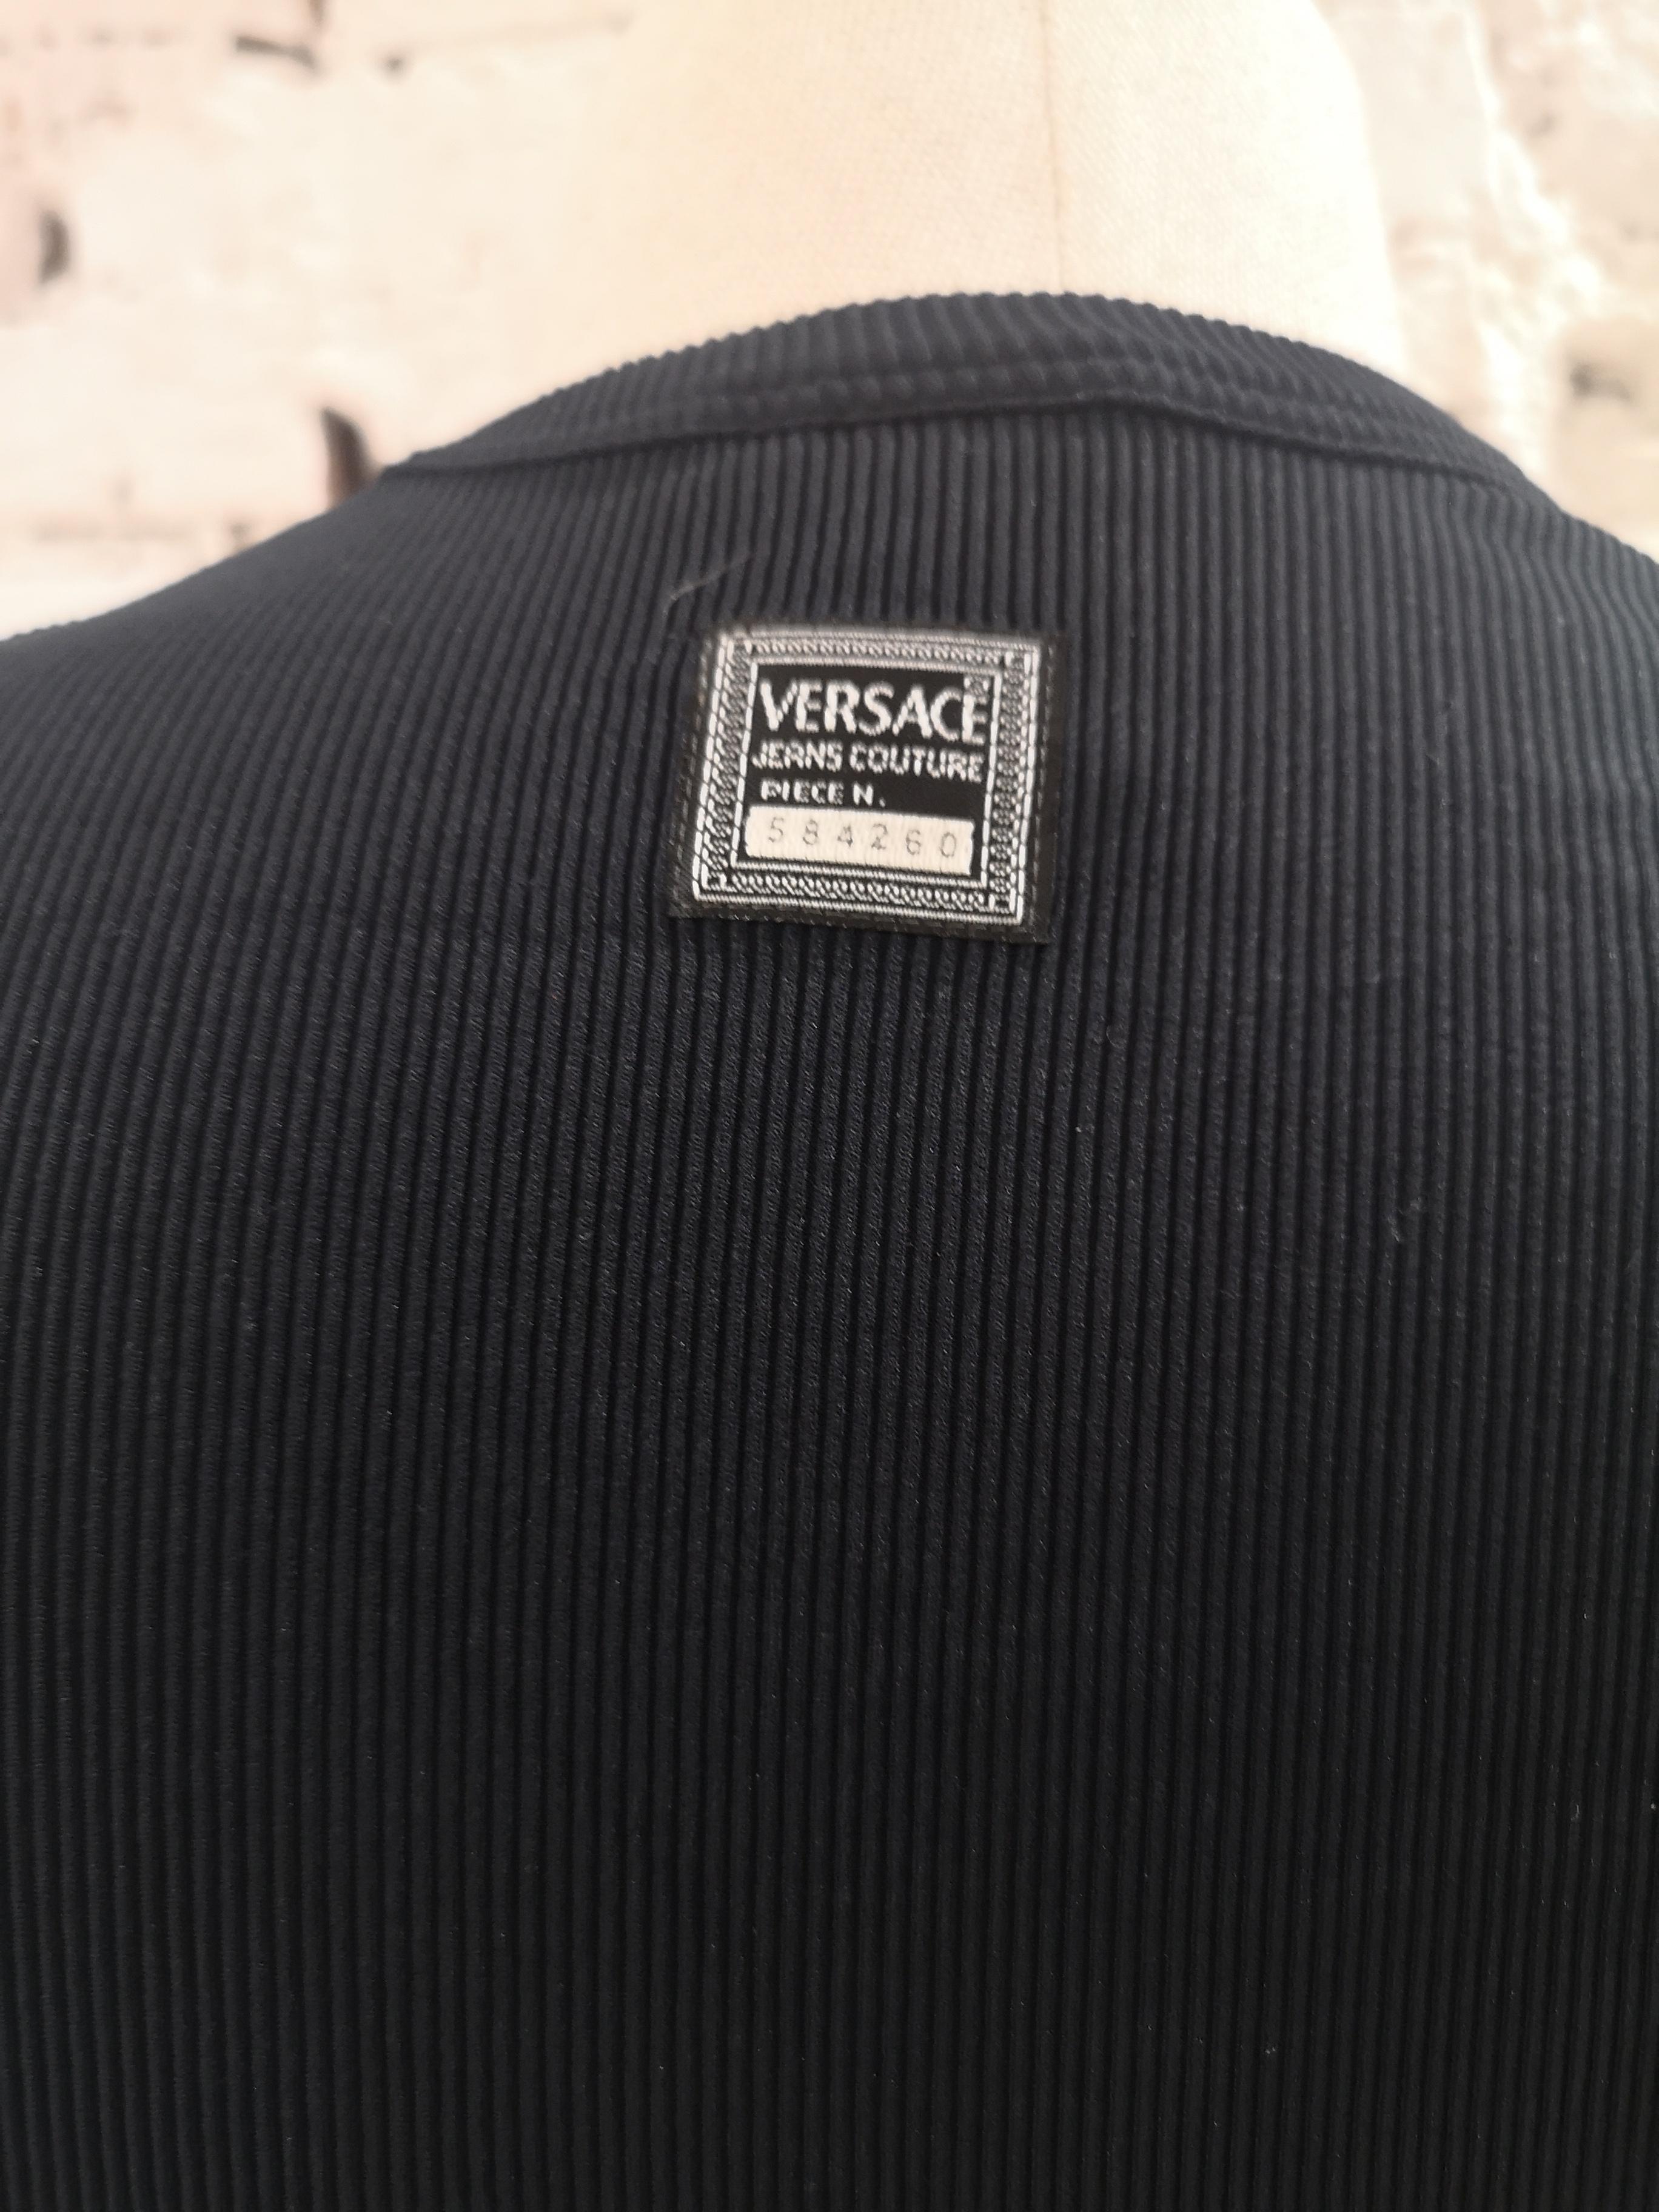 Versace black nylon long t-shirt For Sale 2